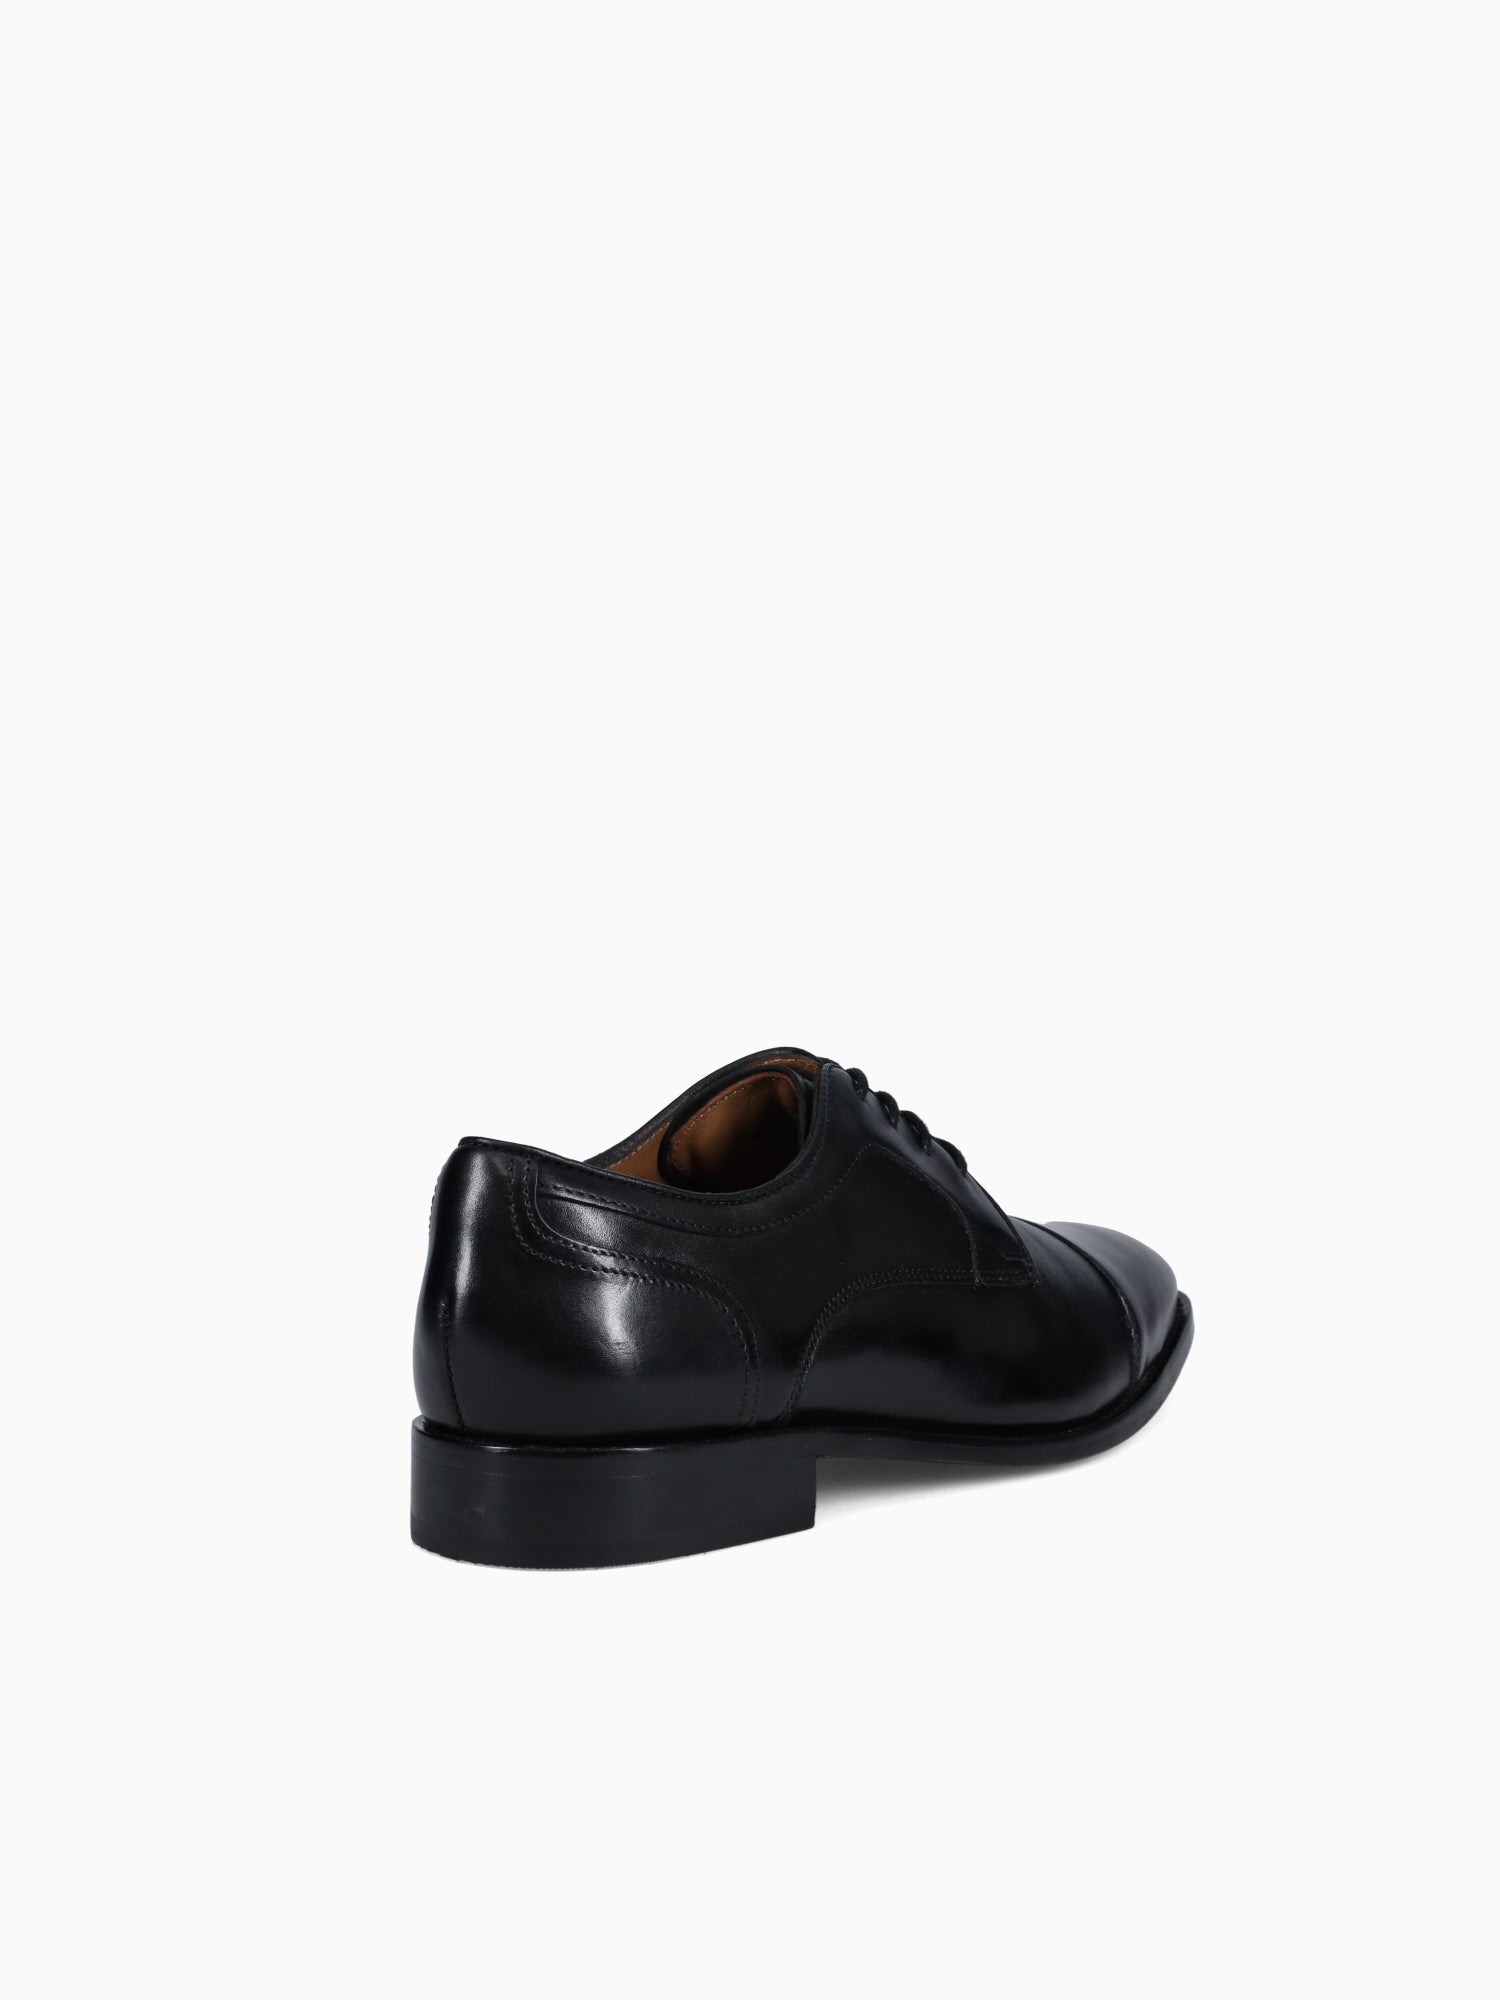 Conetta Cap Toe Oxford Black Leather Black / 7 / M